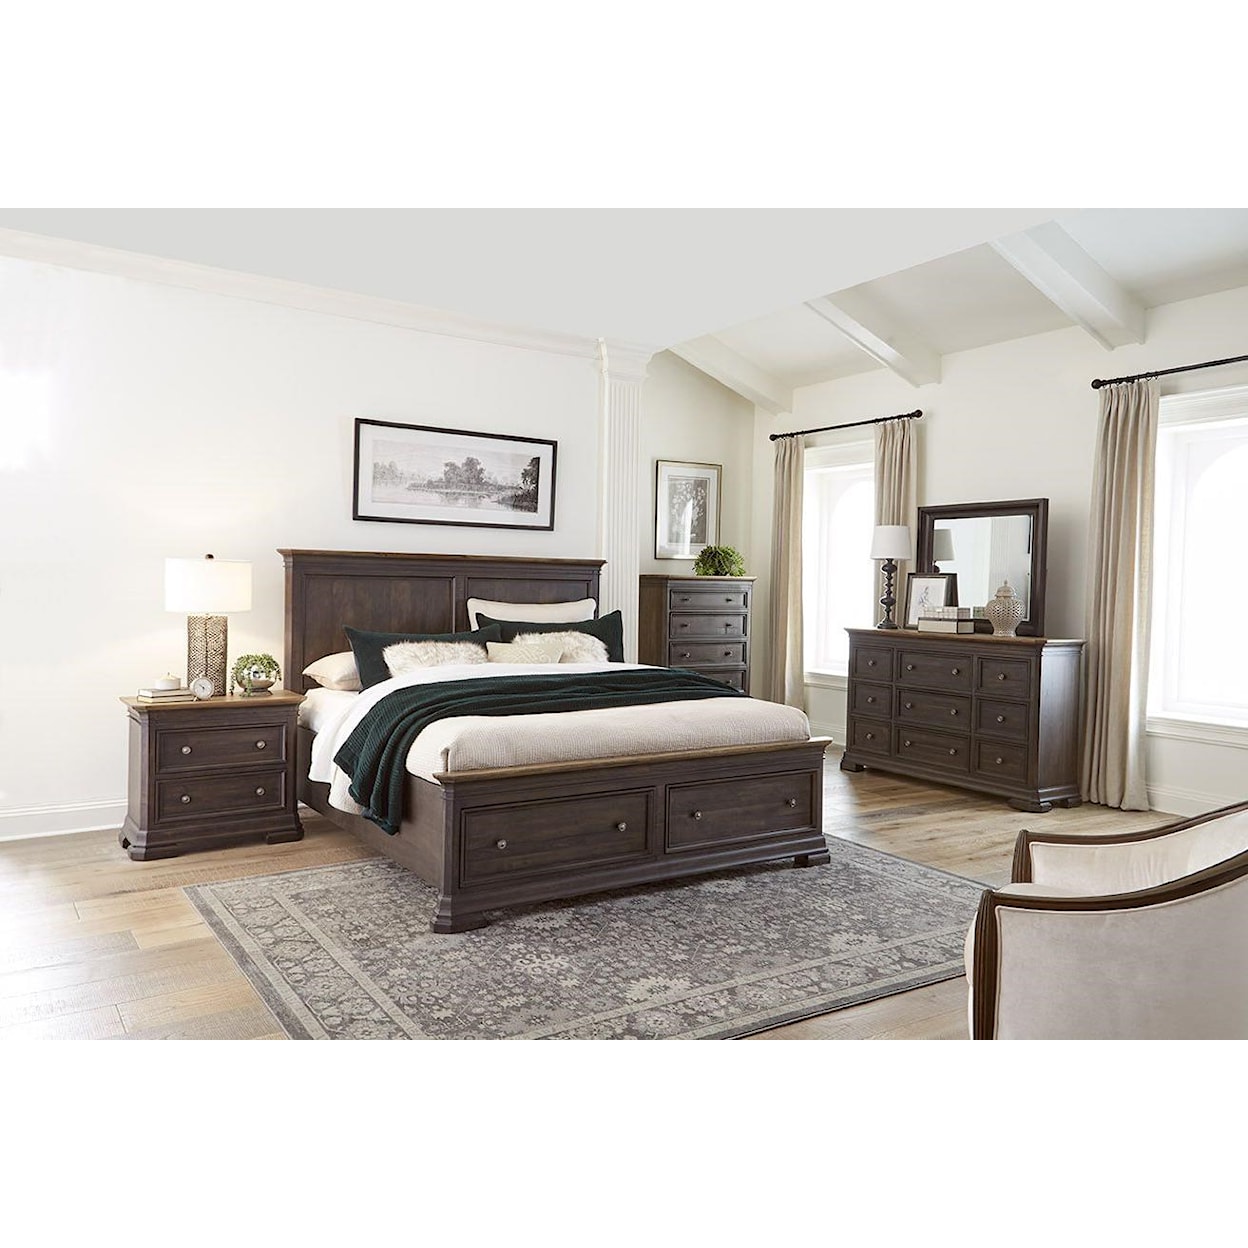 Napa Furniture Design Grand Louie Queen Bedroom Group